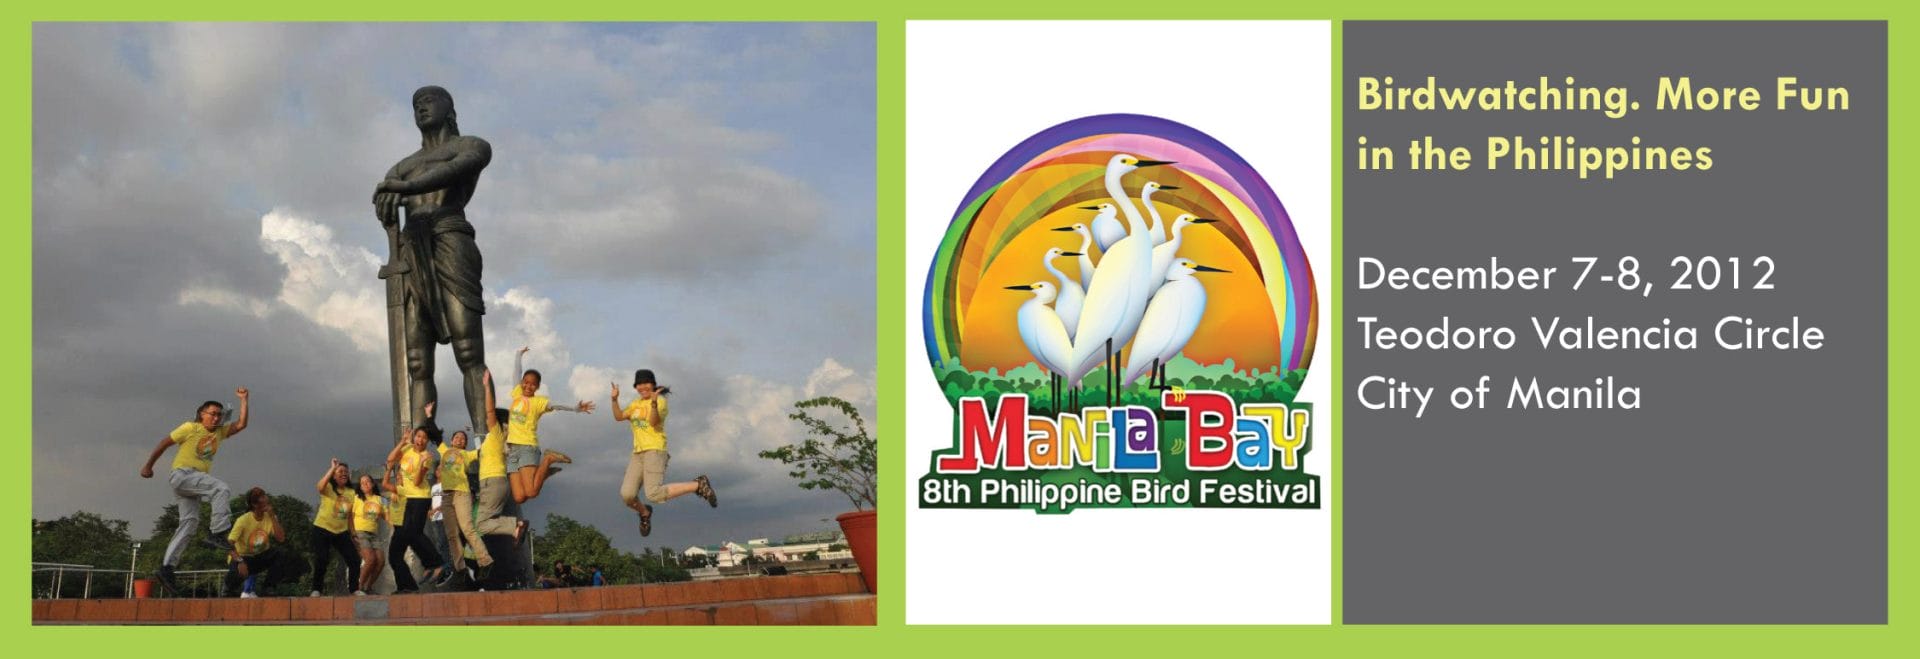 8thPhilippine Bird Festival